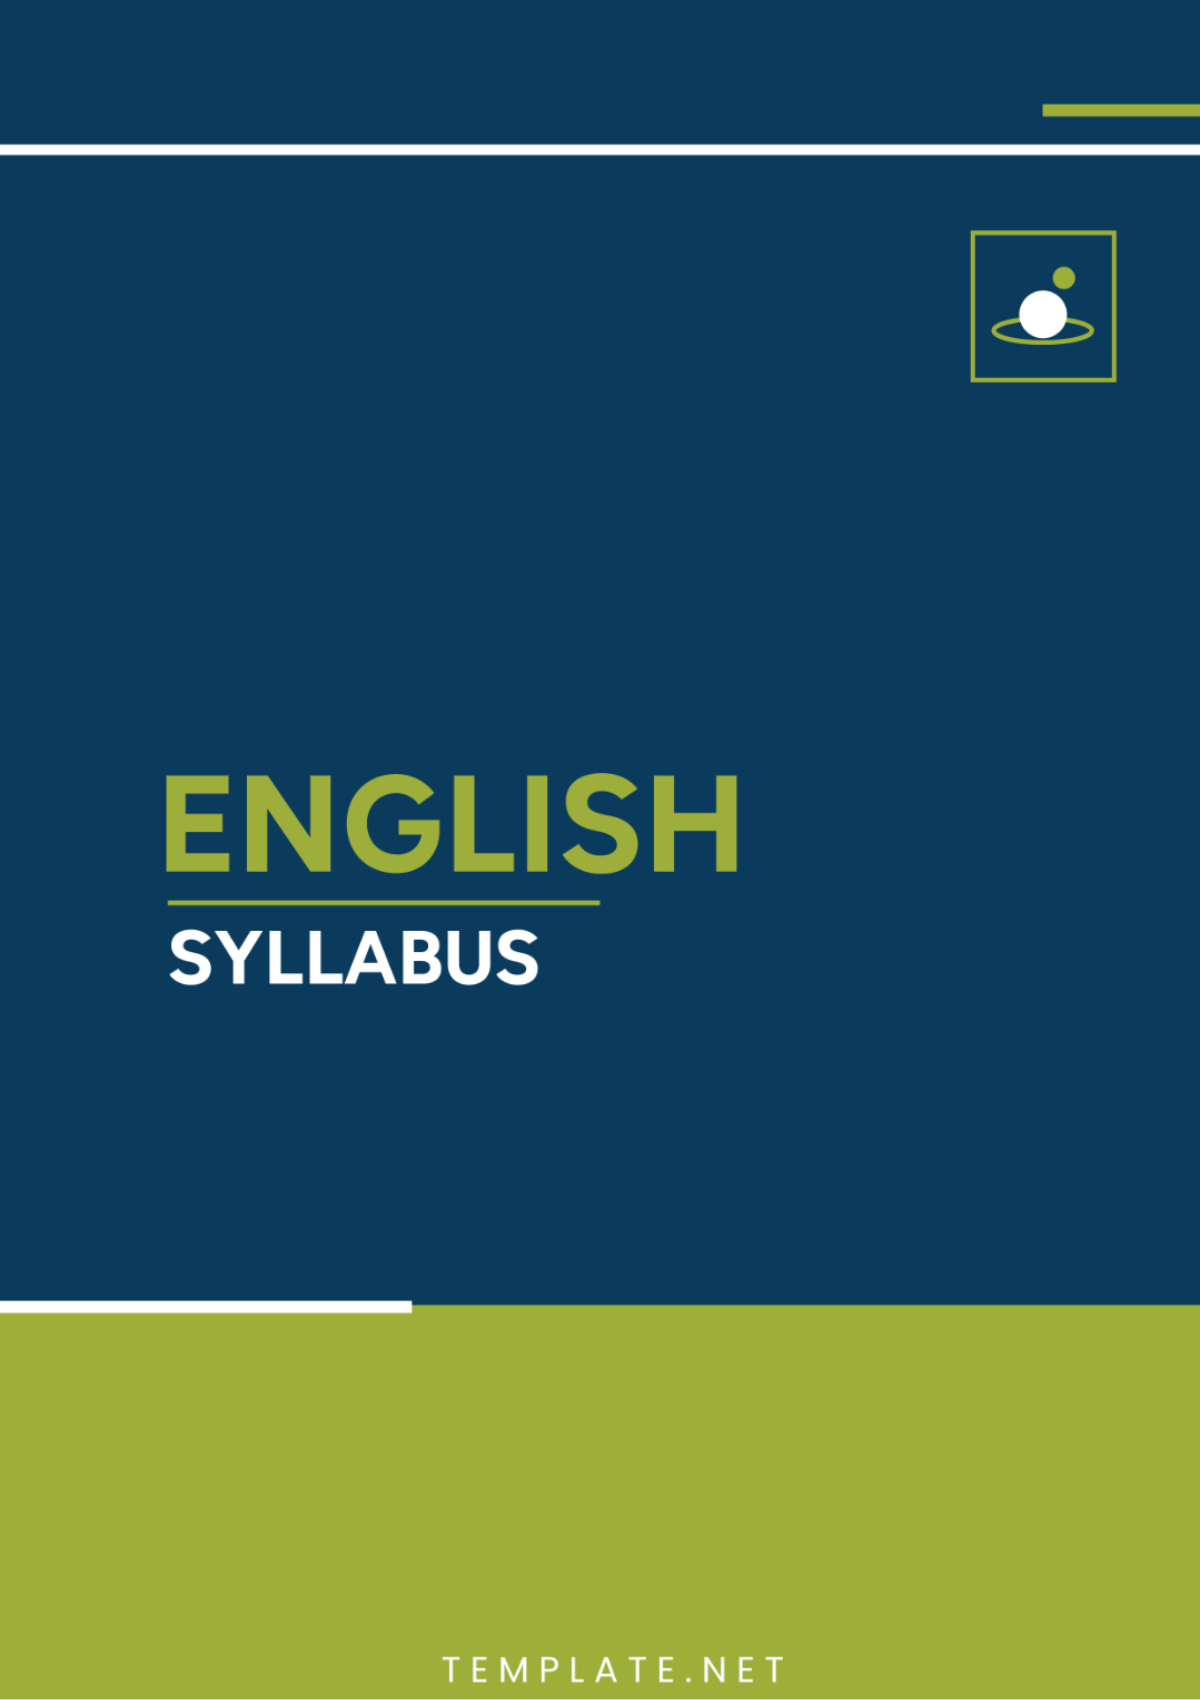 English Syllabus Template